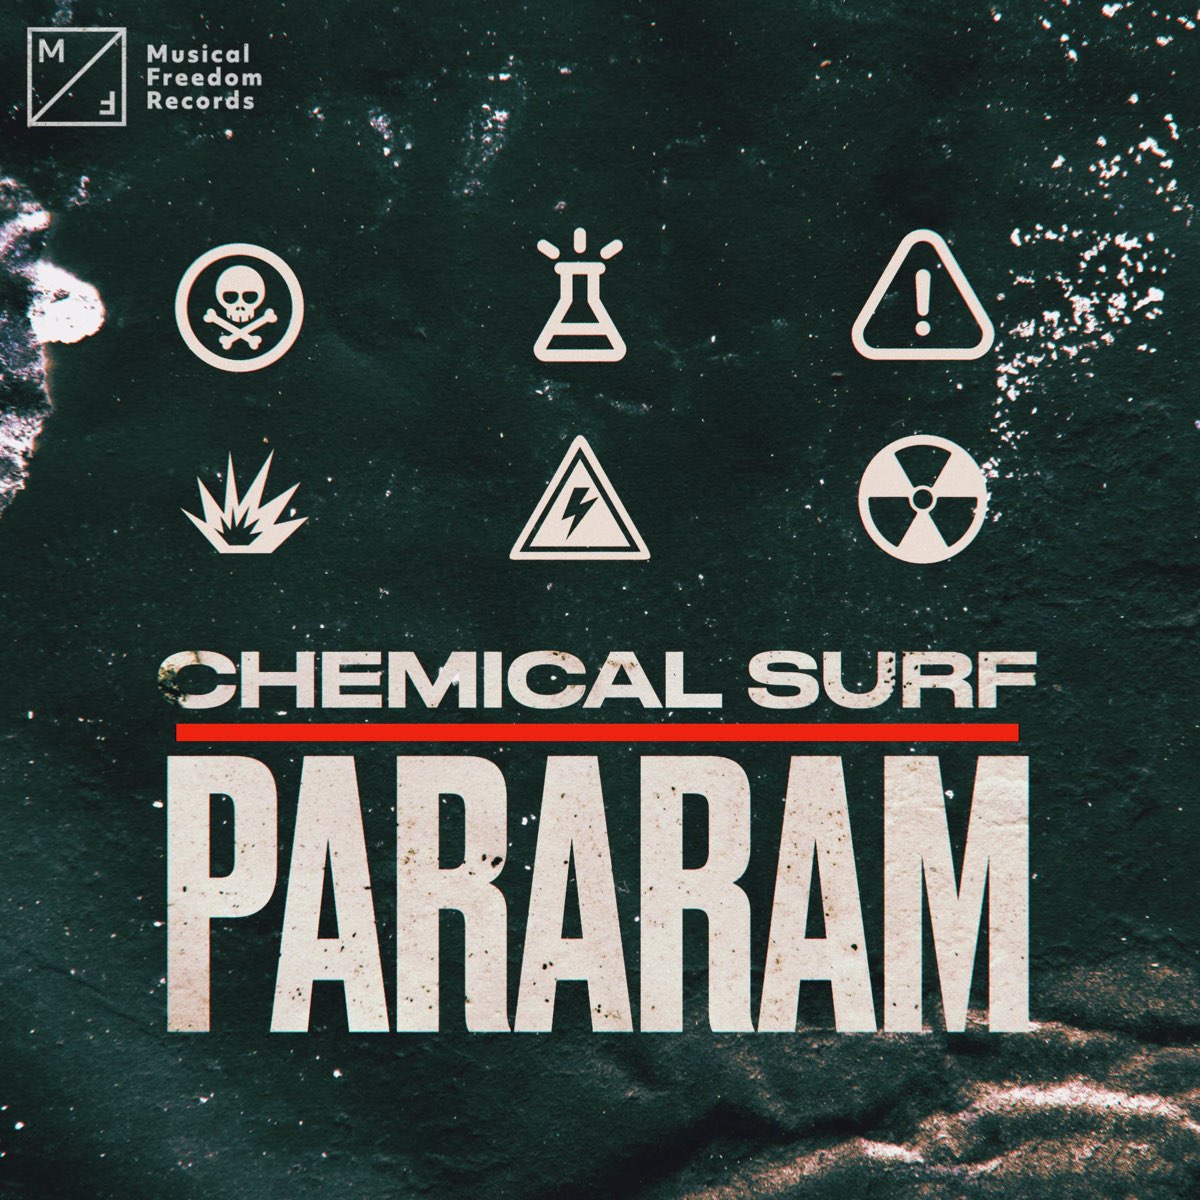 Pararam - Single - Album by Chemical Surf - Apple Music